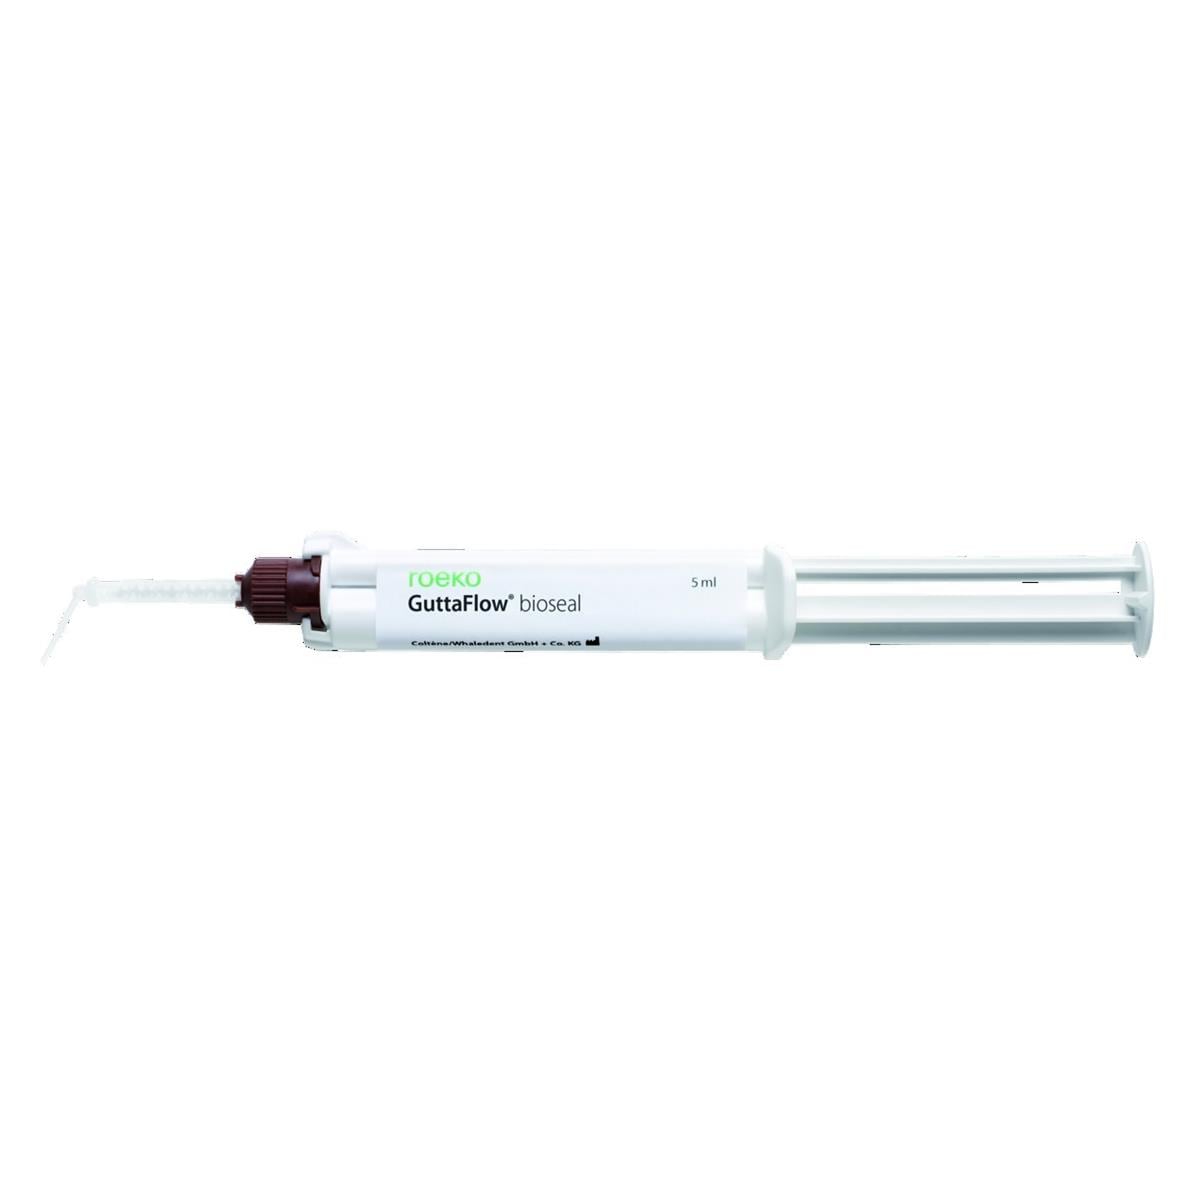 GuttaFlow Bioseal ROEKO - seringue de 5ml